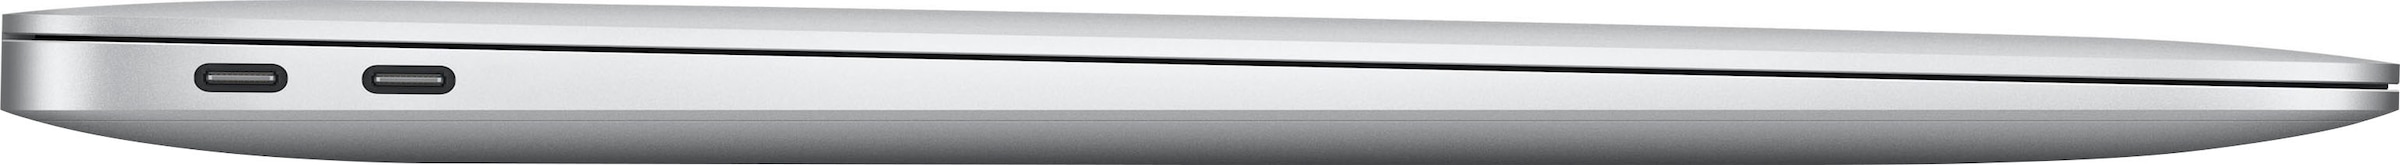 Apple Notebook »MacBook Air«, 33,78 cm, / 13,3 Zoll, Apple, M1, M1, 256 GB  SSD, 8-core CPU auf Raten bestellen